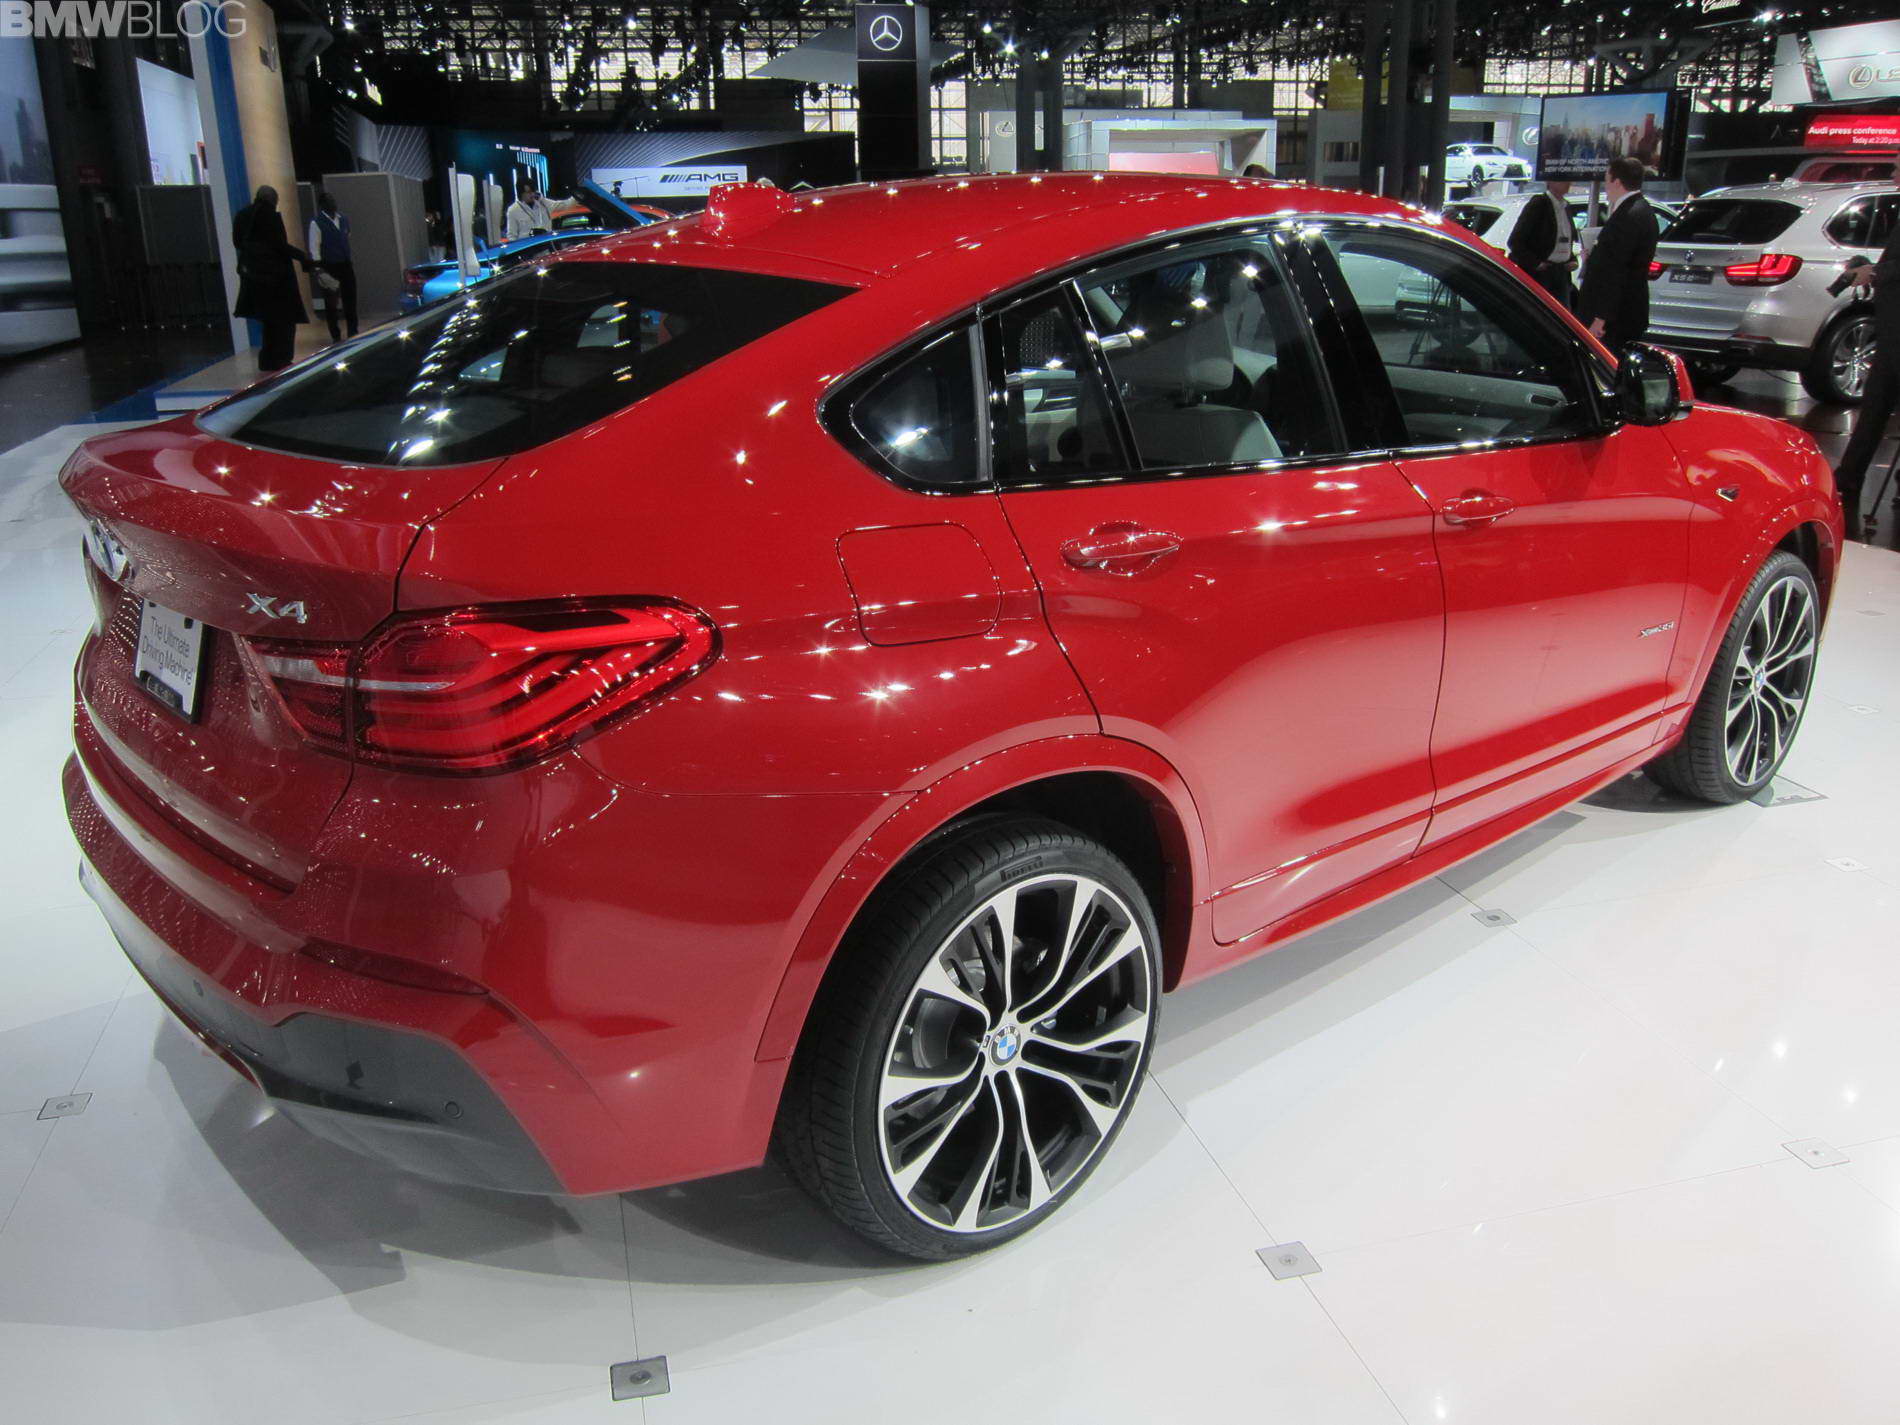 BMW X4 2014 World premiere